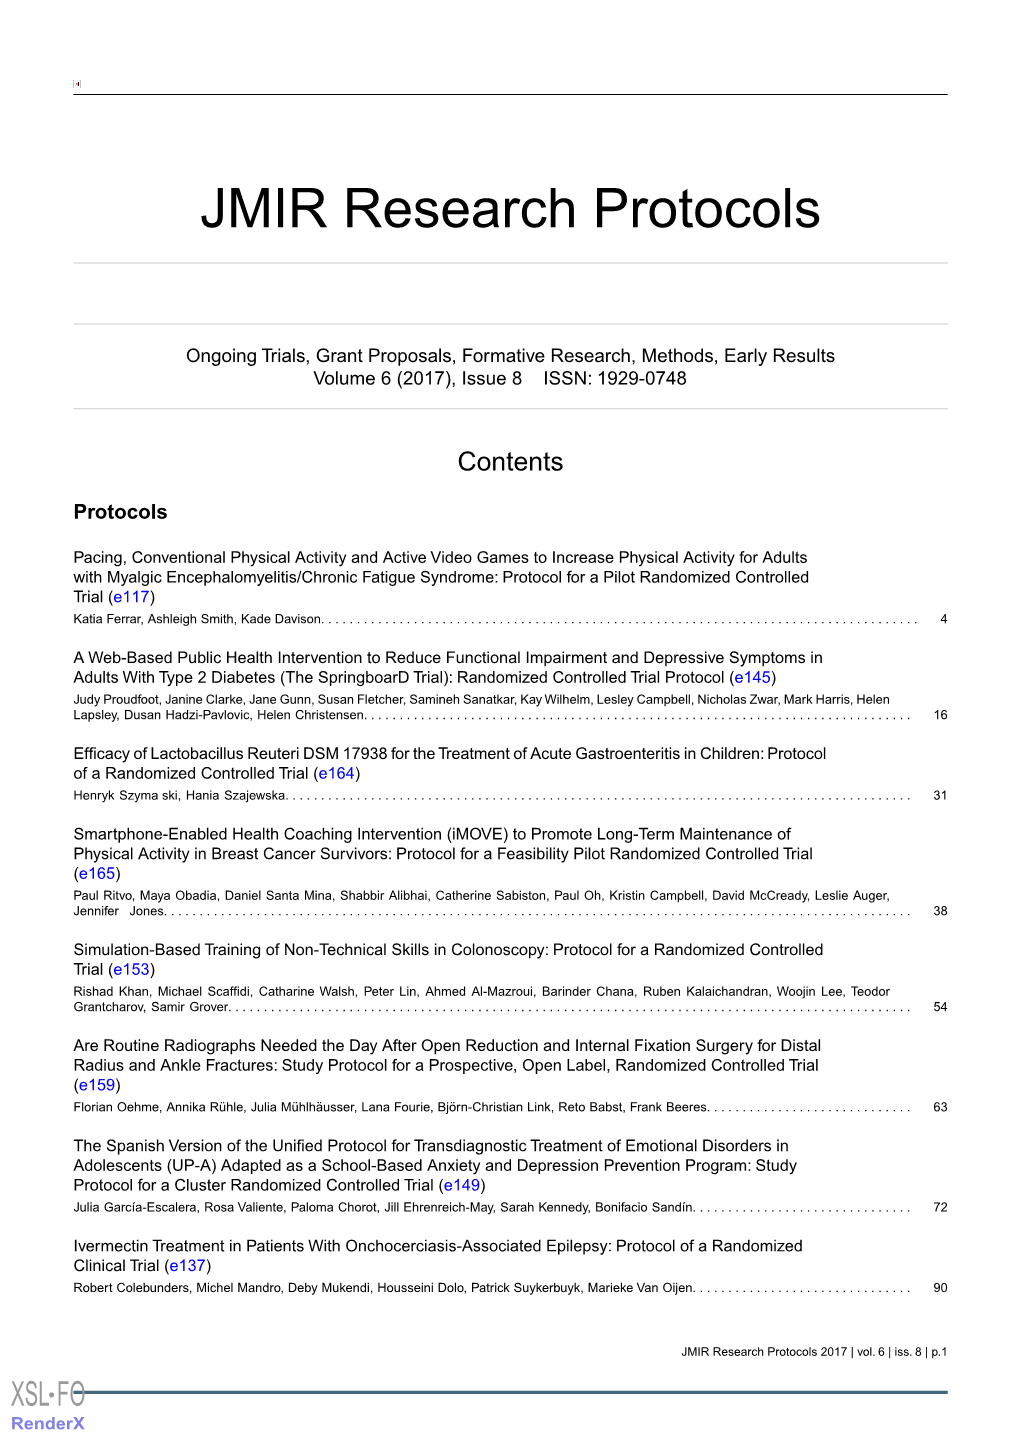 JMIR Research Protocols